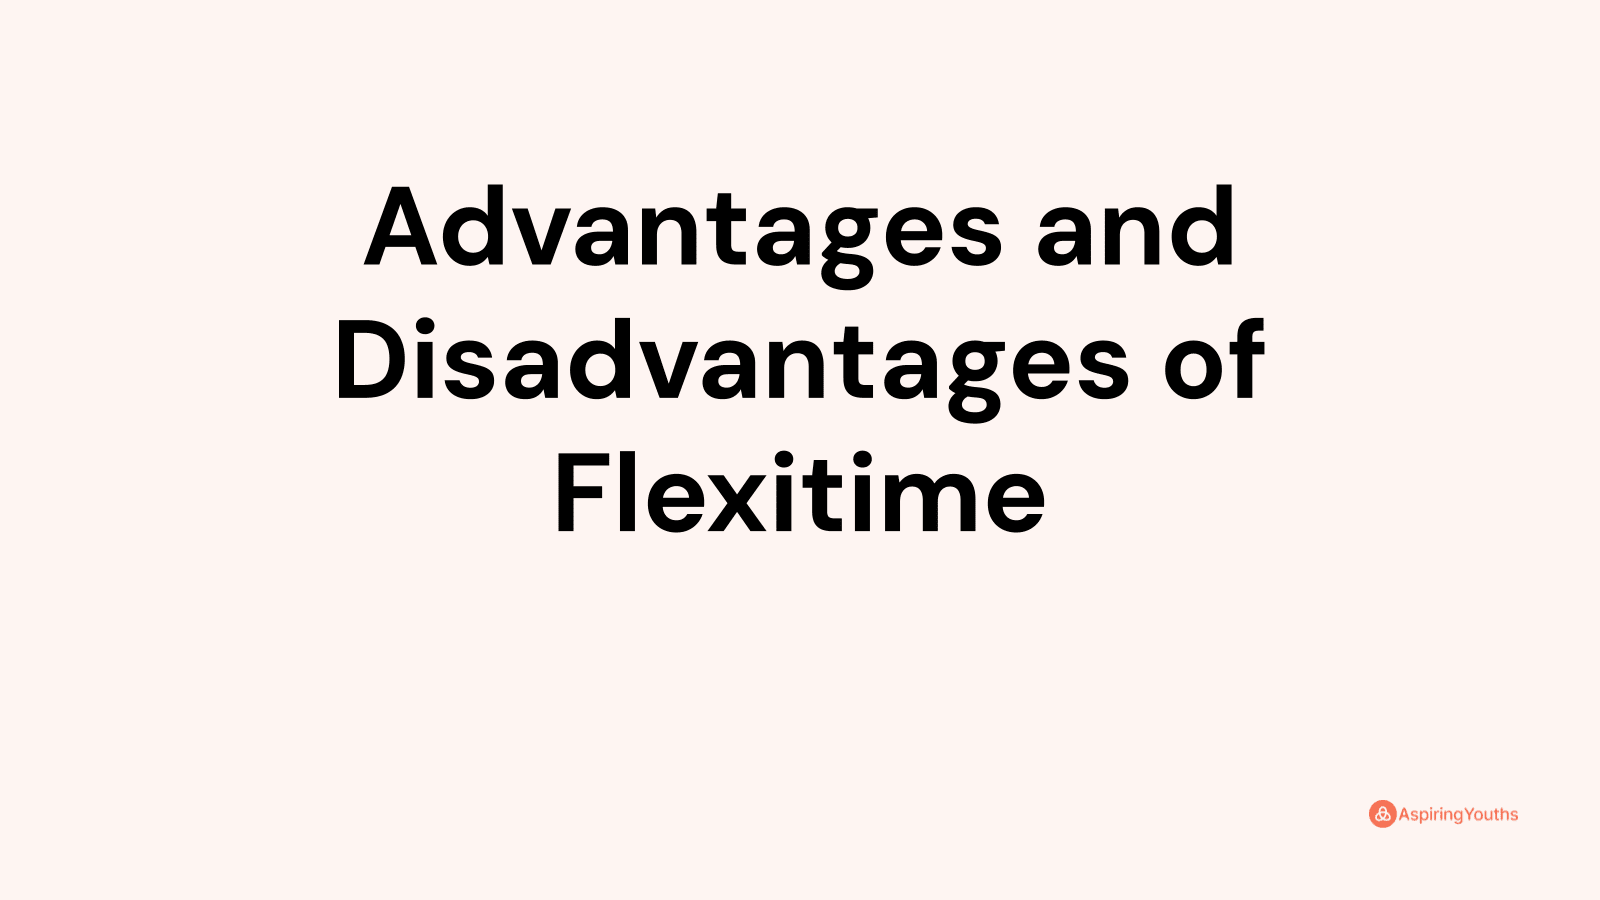 Advantages and disadvantages of Flexitime